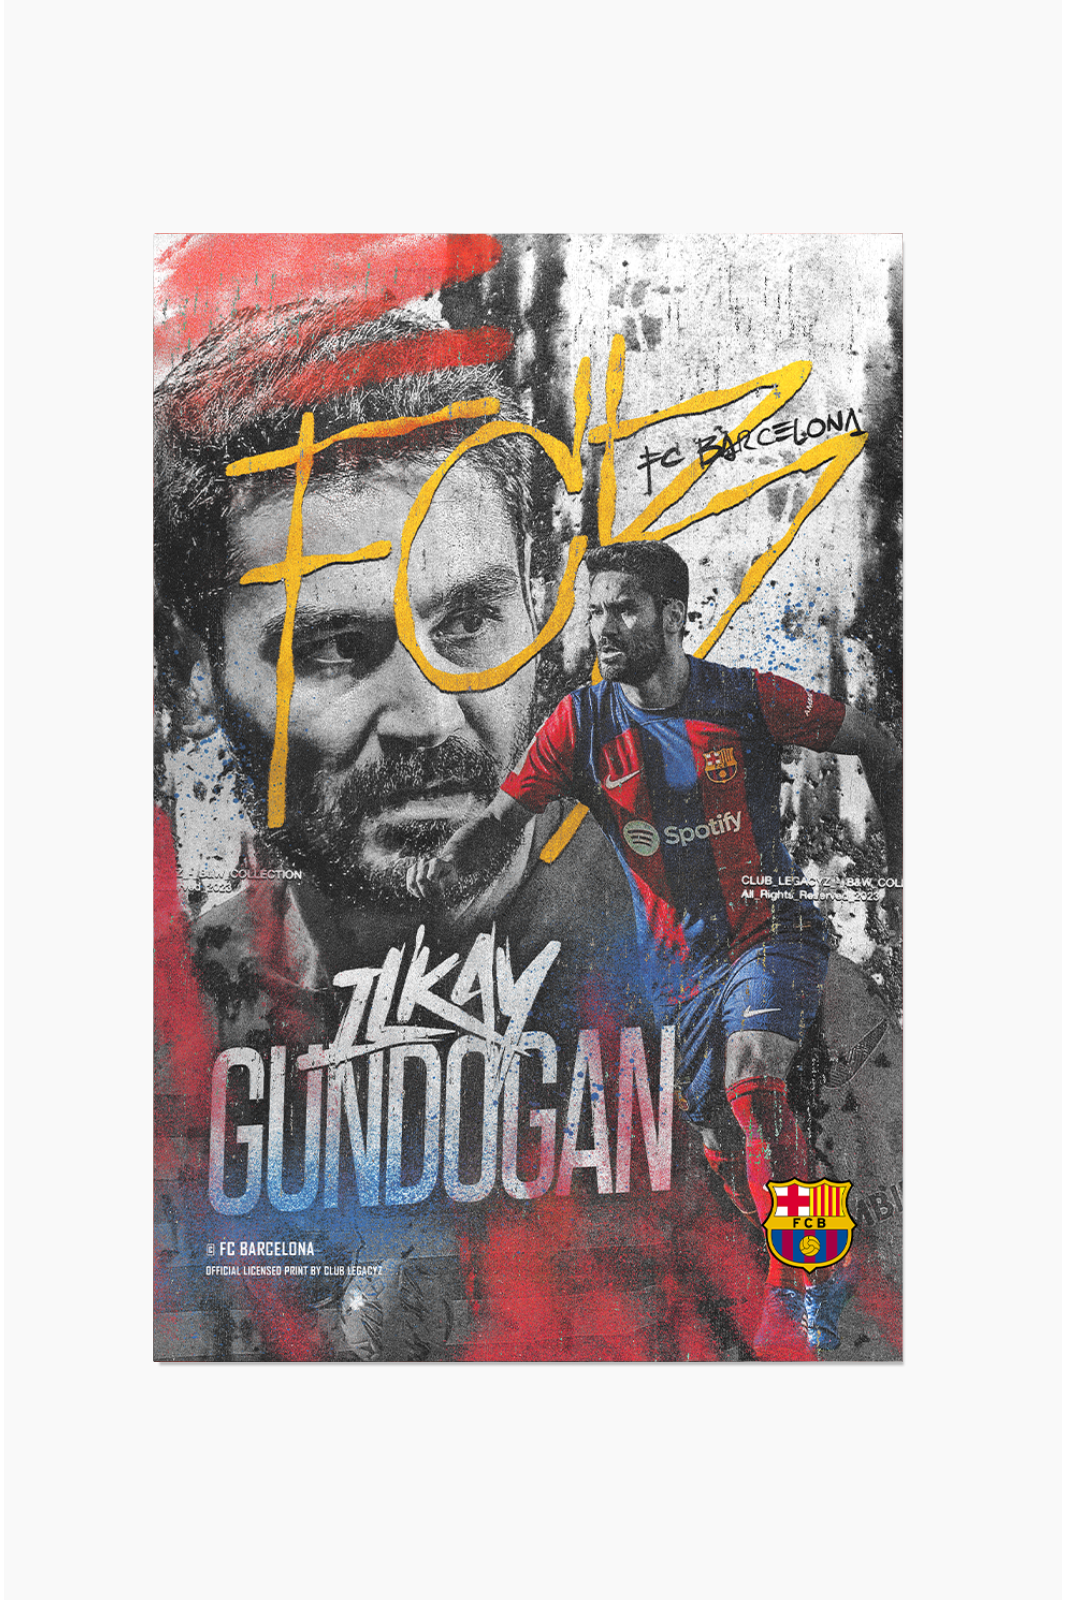 FC Barcelona - İlkay Gündogan Black & White poster limited to 100